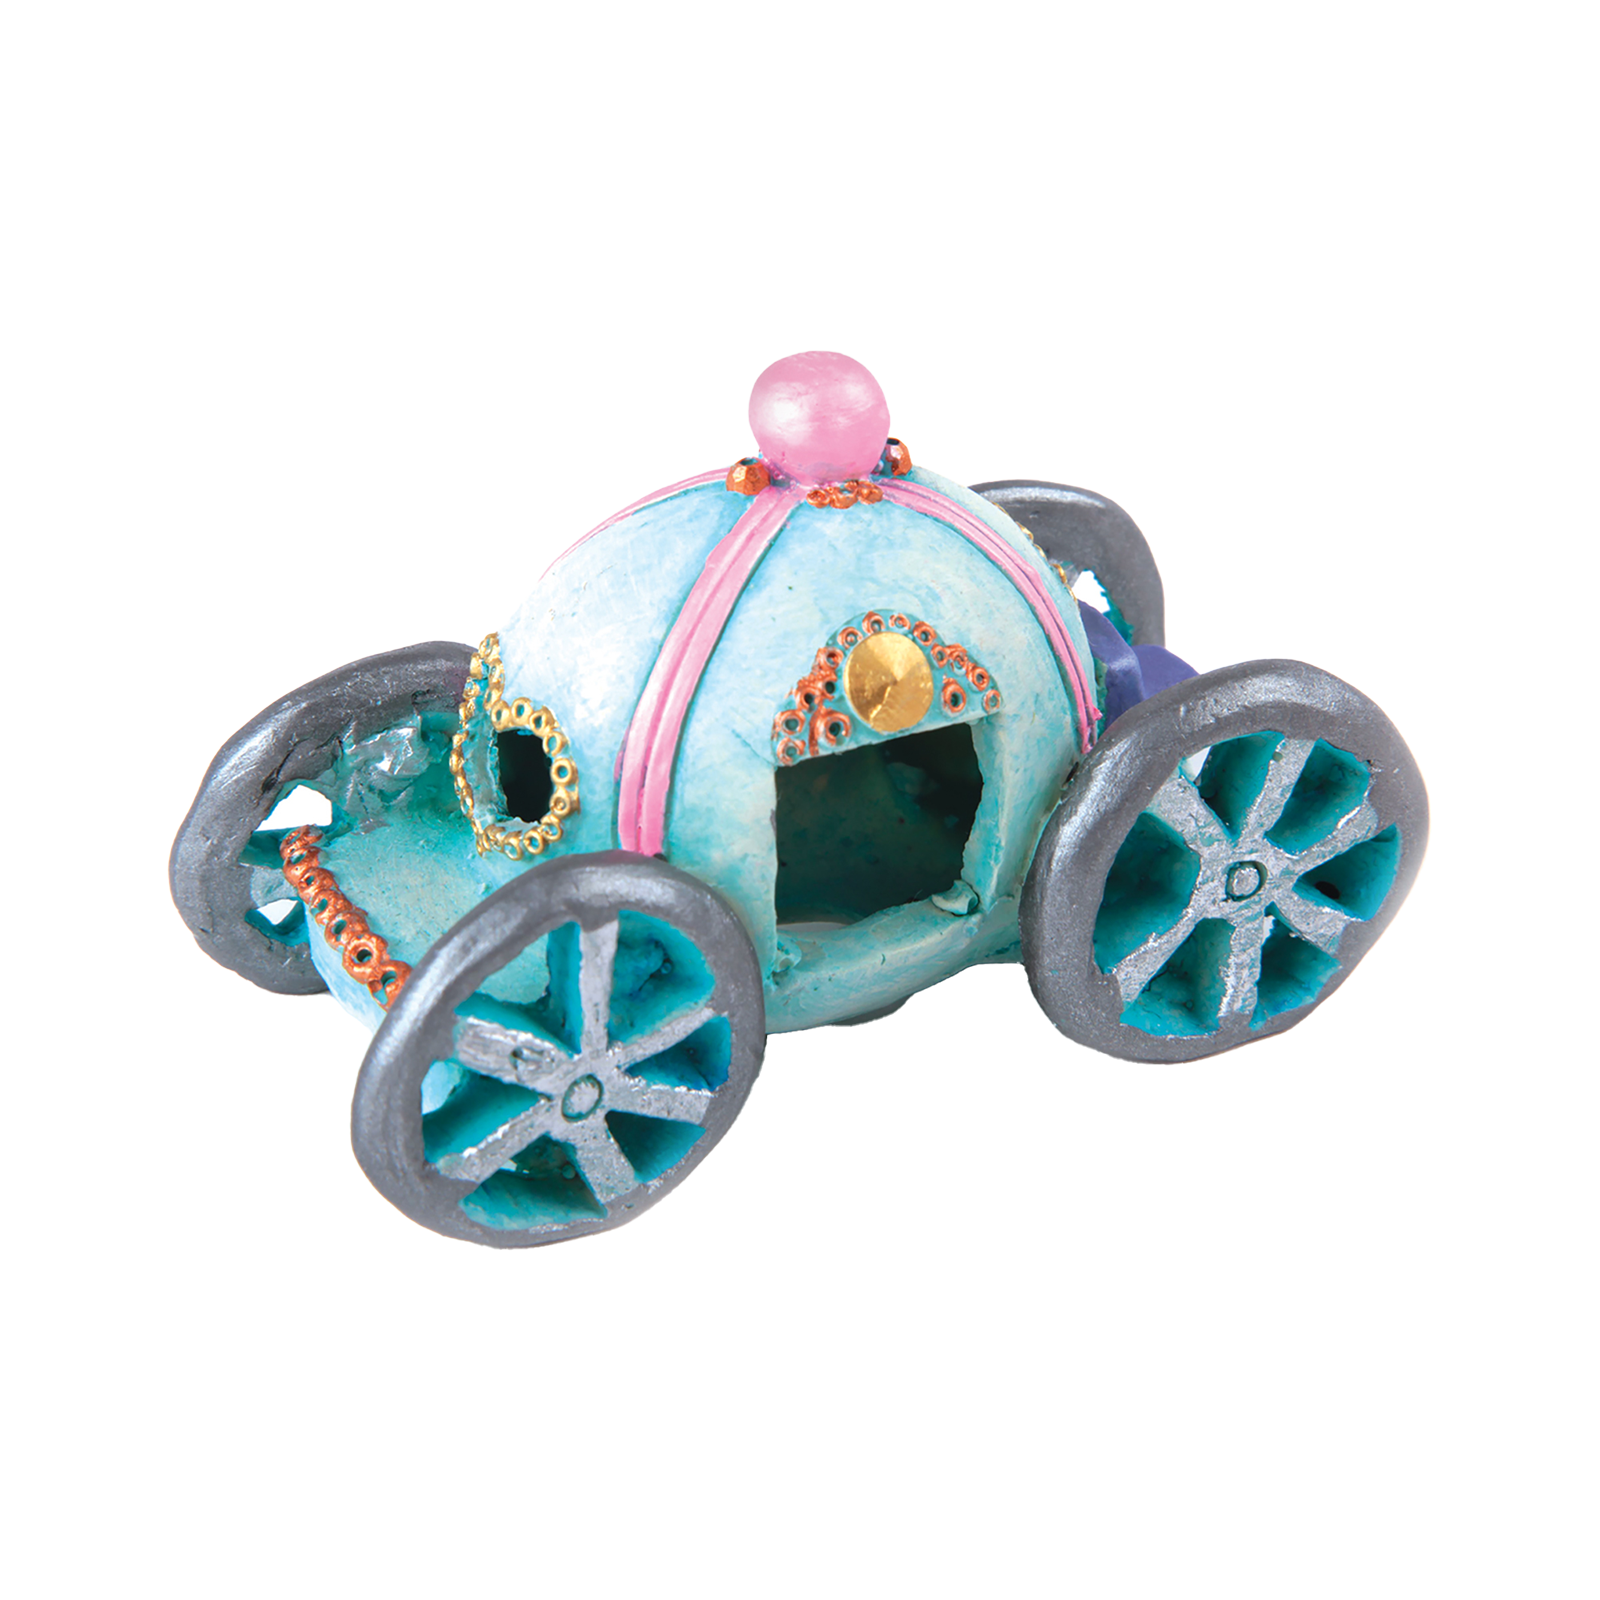 Kazoo Aquarium Ornament Princess Carriage Small